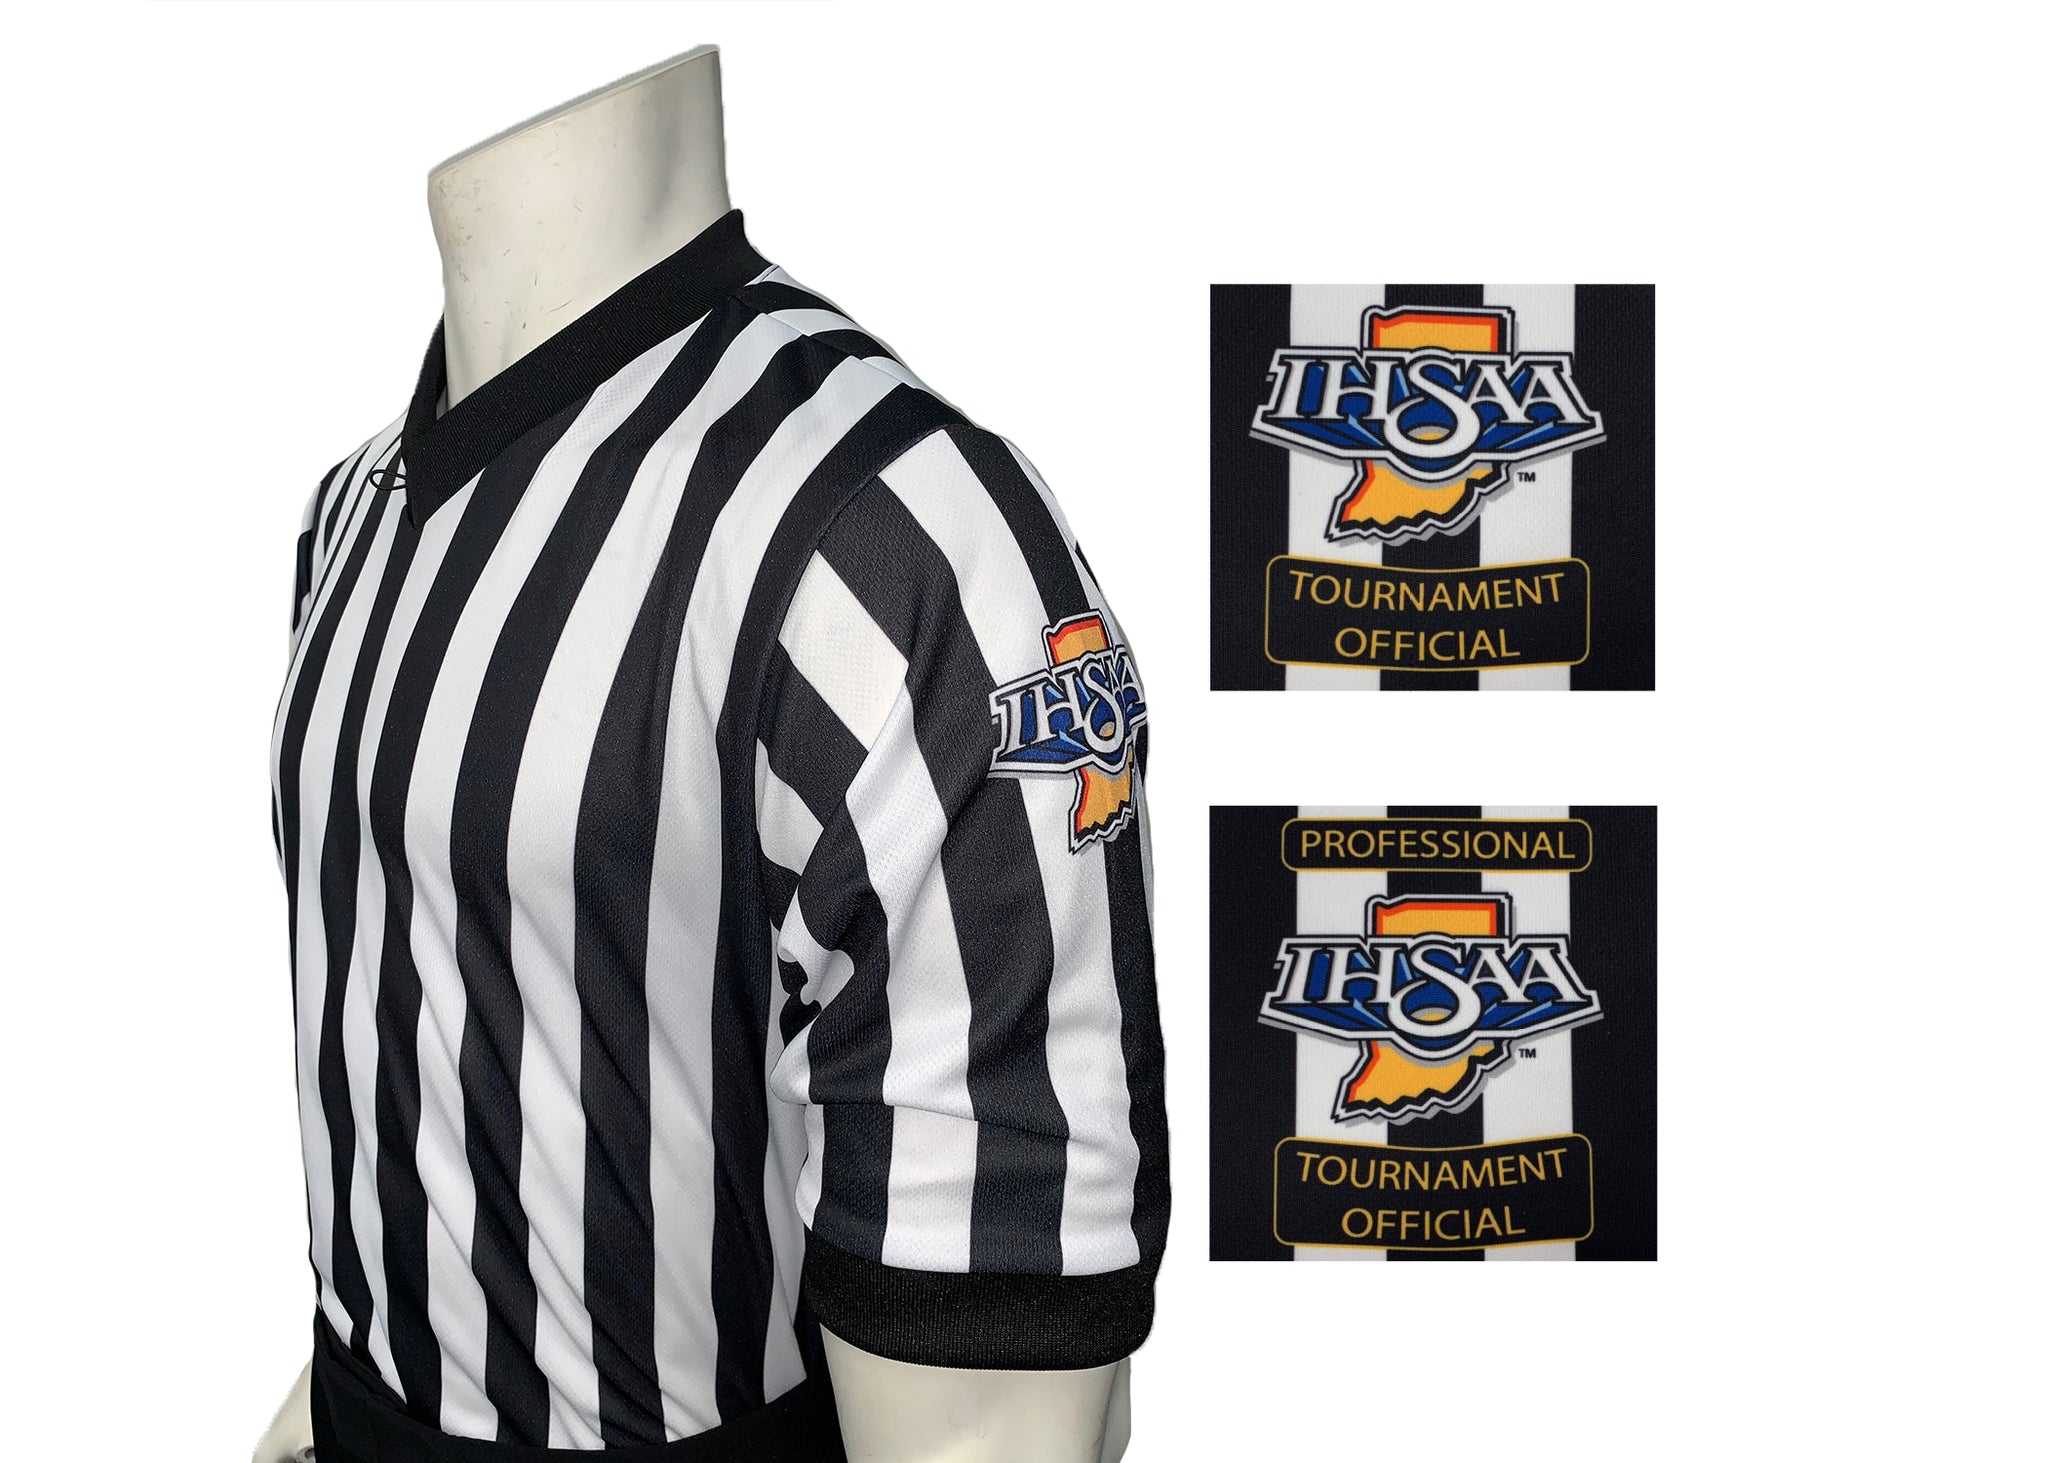 USA200IN-607 - Smitty "Made in USA" - "BODY FLEX" "IHSAA" V-Neck Men's Basketball Shirt